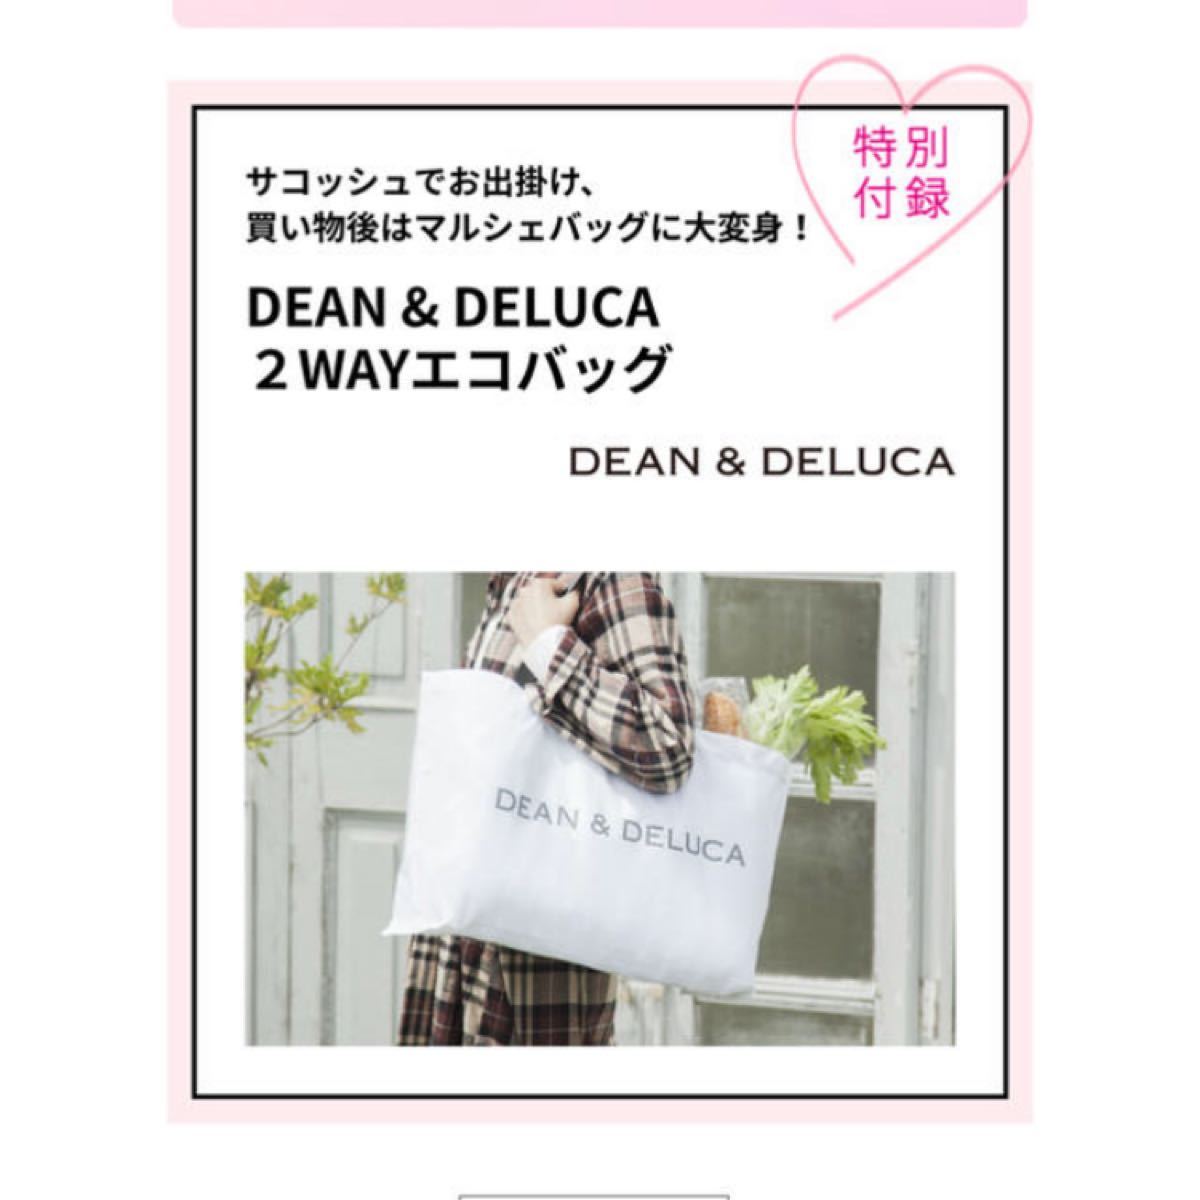 DEAN&DELUCA 2way エコバッグ トートバッグ ゼクシィ付録 ディーンアンドデルーカ